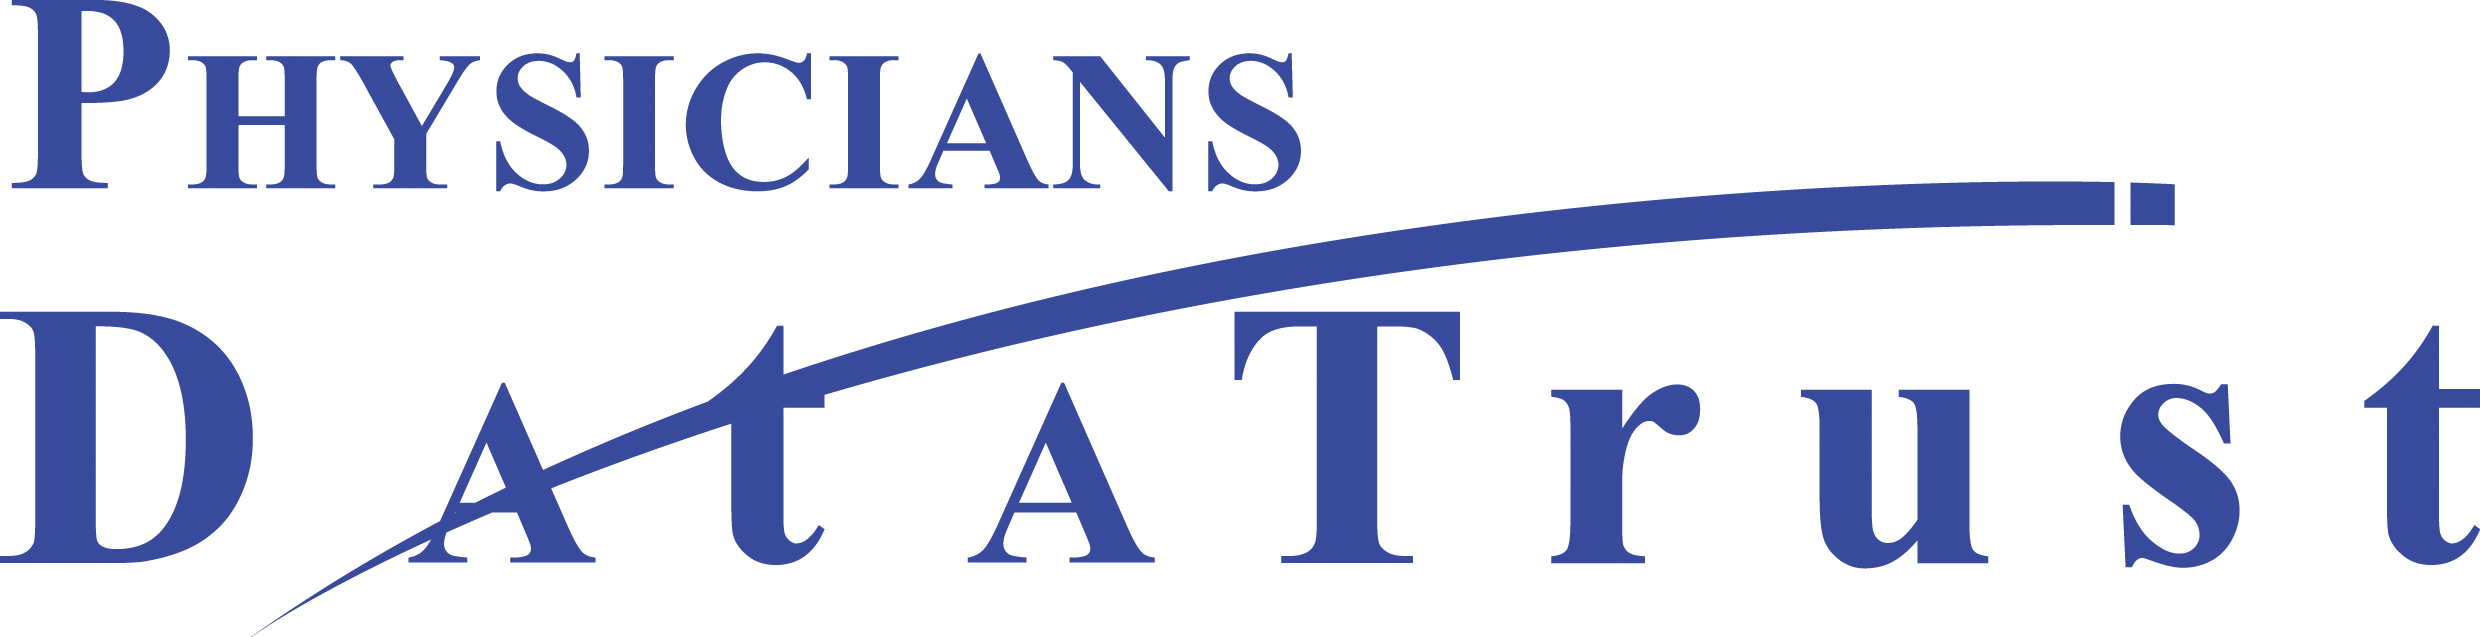 Physicians DataTrust logo